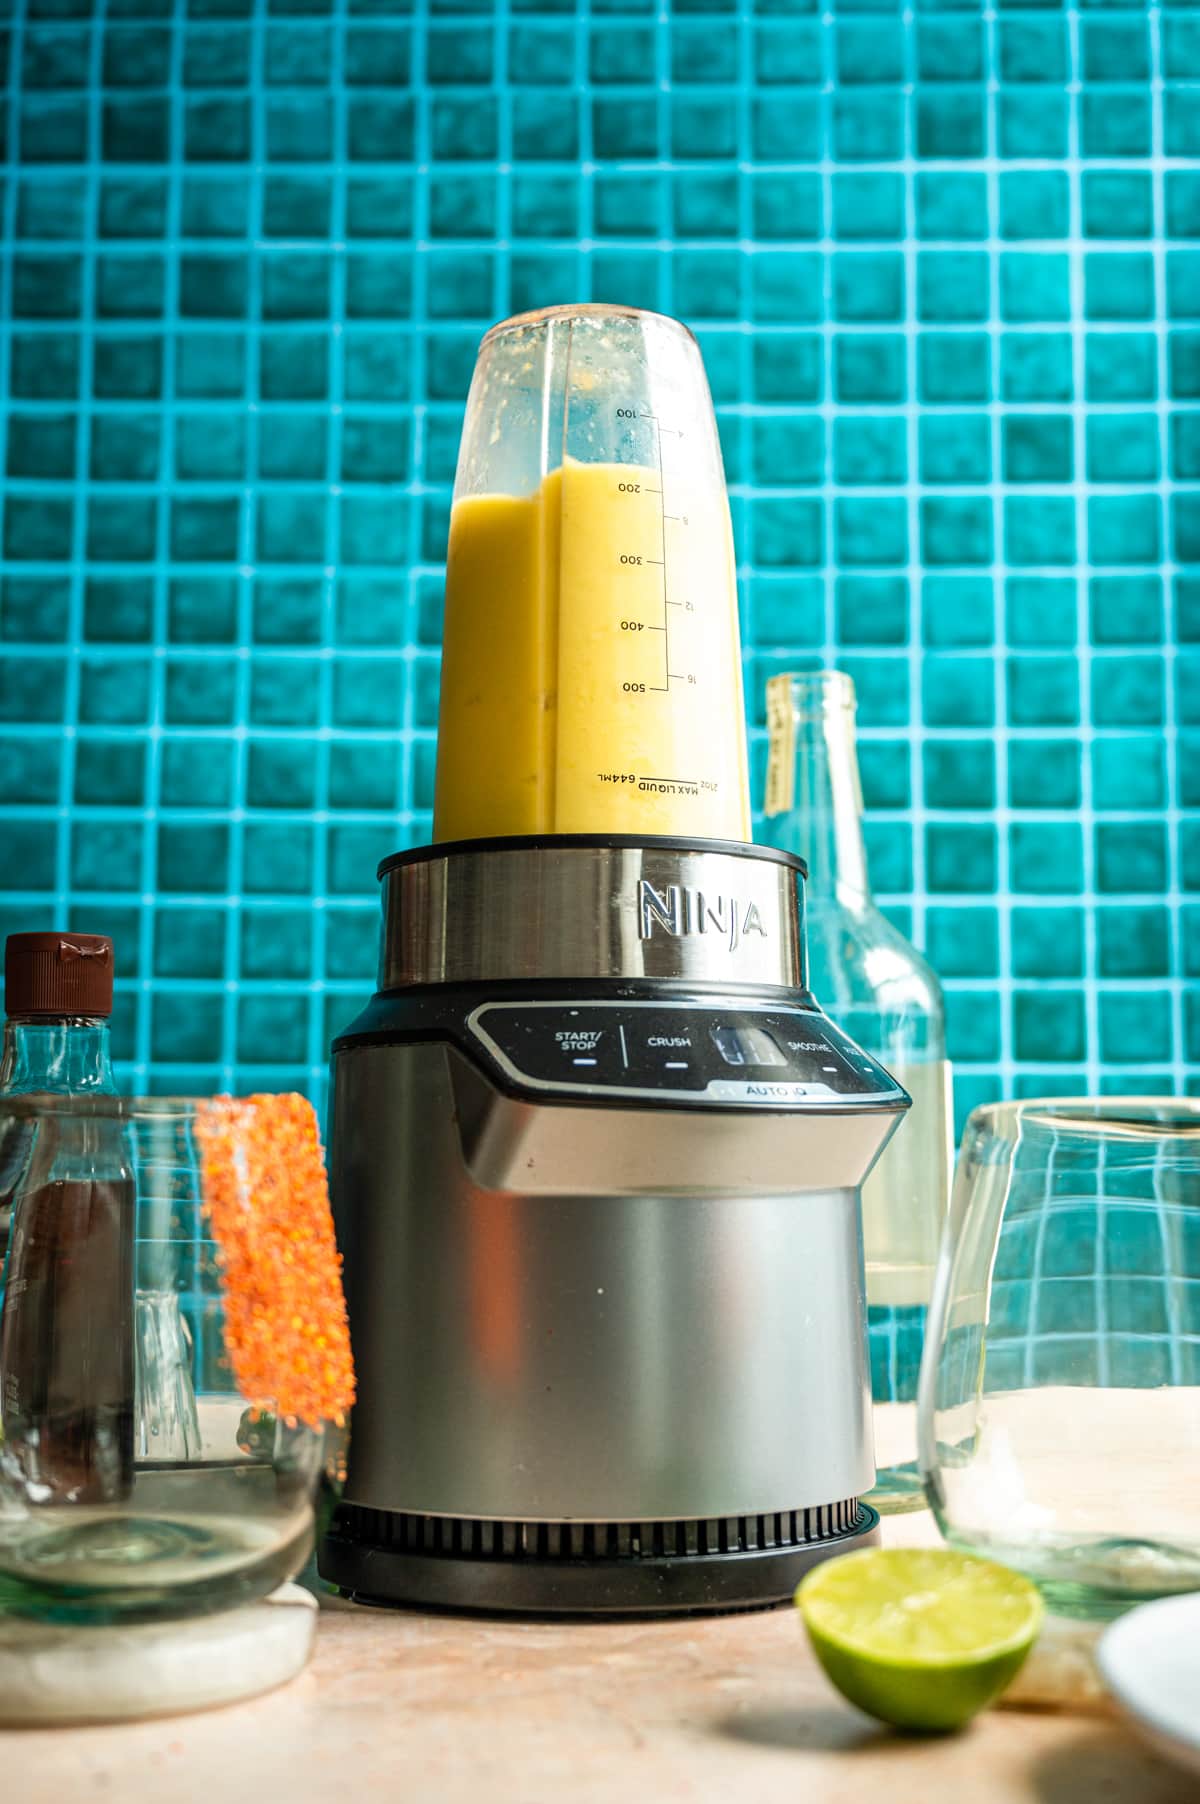 Blend the ingredients until smooth in a blender.